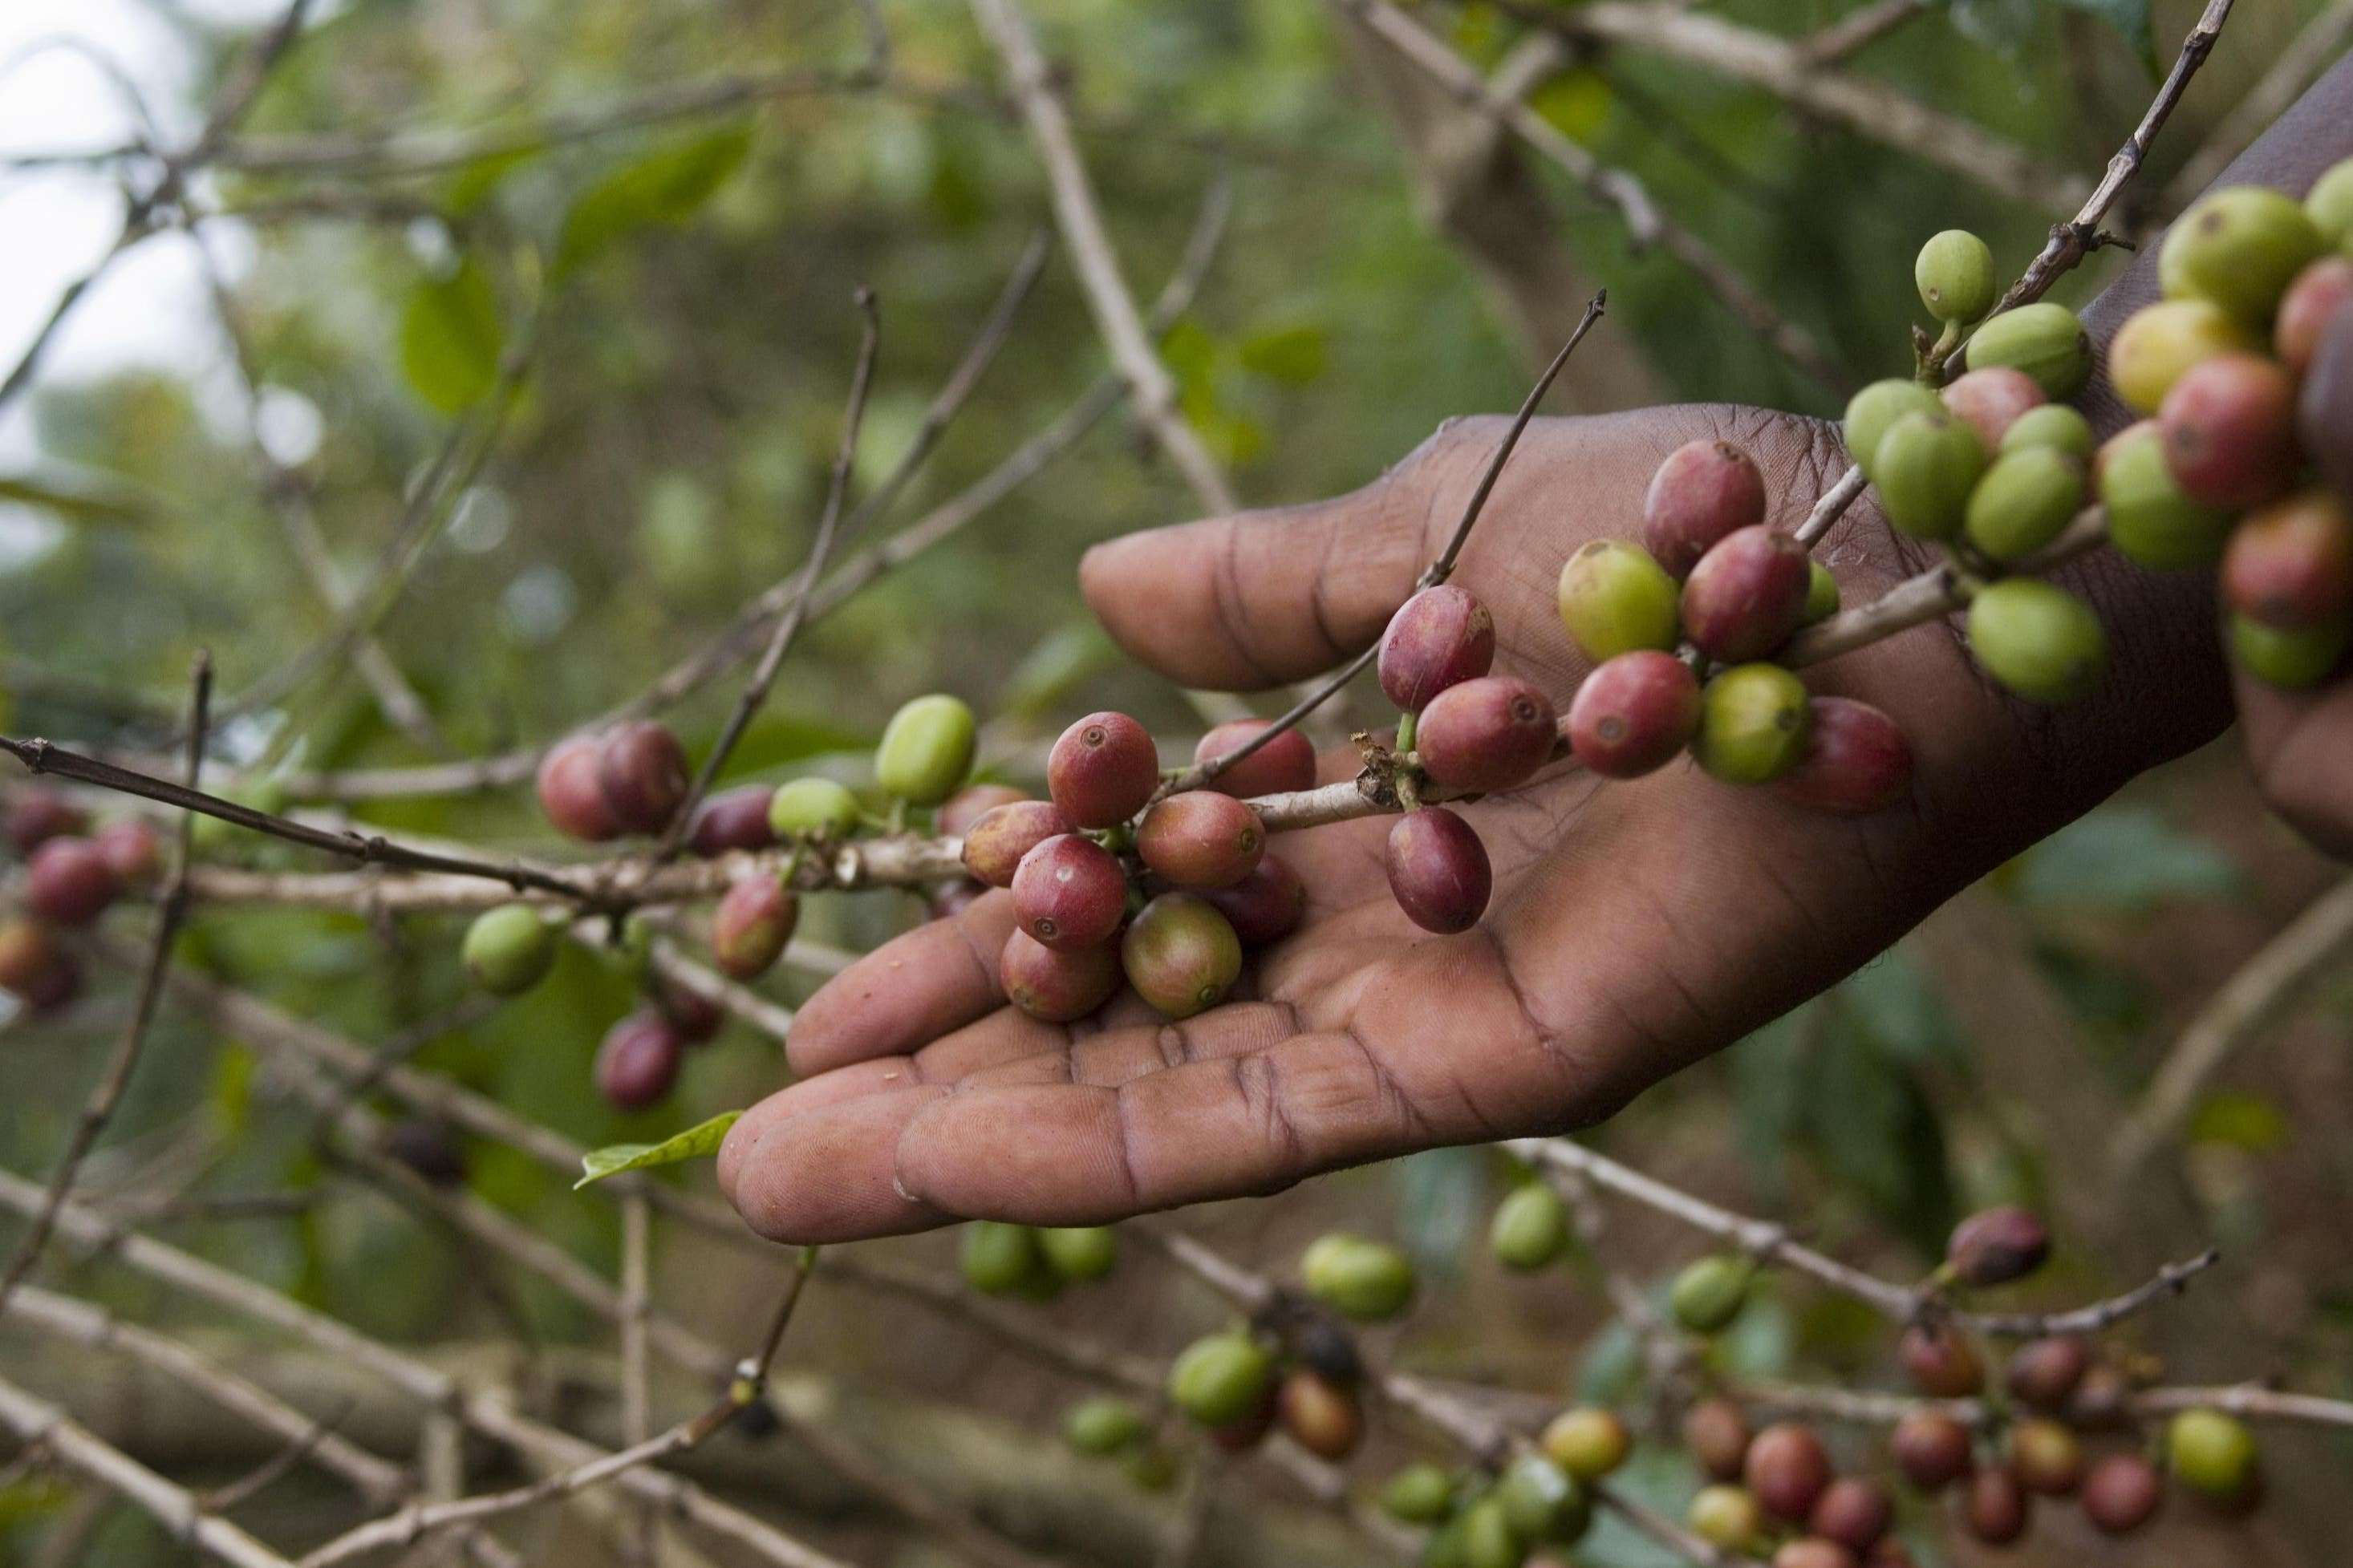 The Fairtrade Foundation said the standards are a “critical lifeline” for coffee farmers (Simon Rawles/PA)